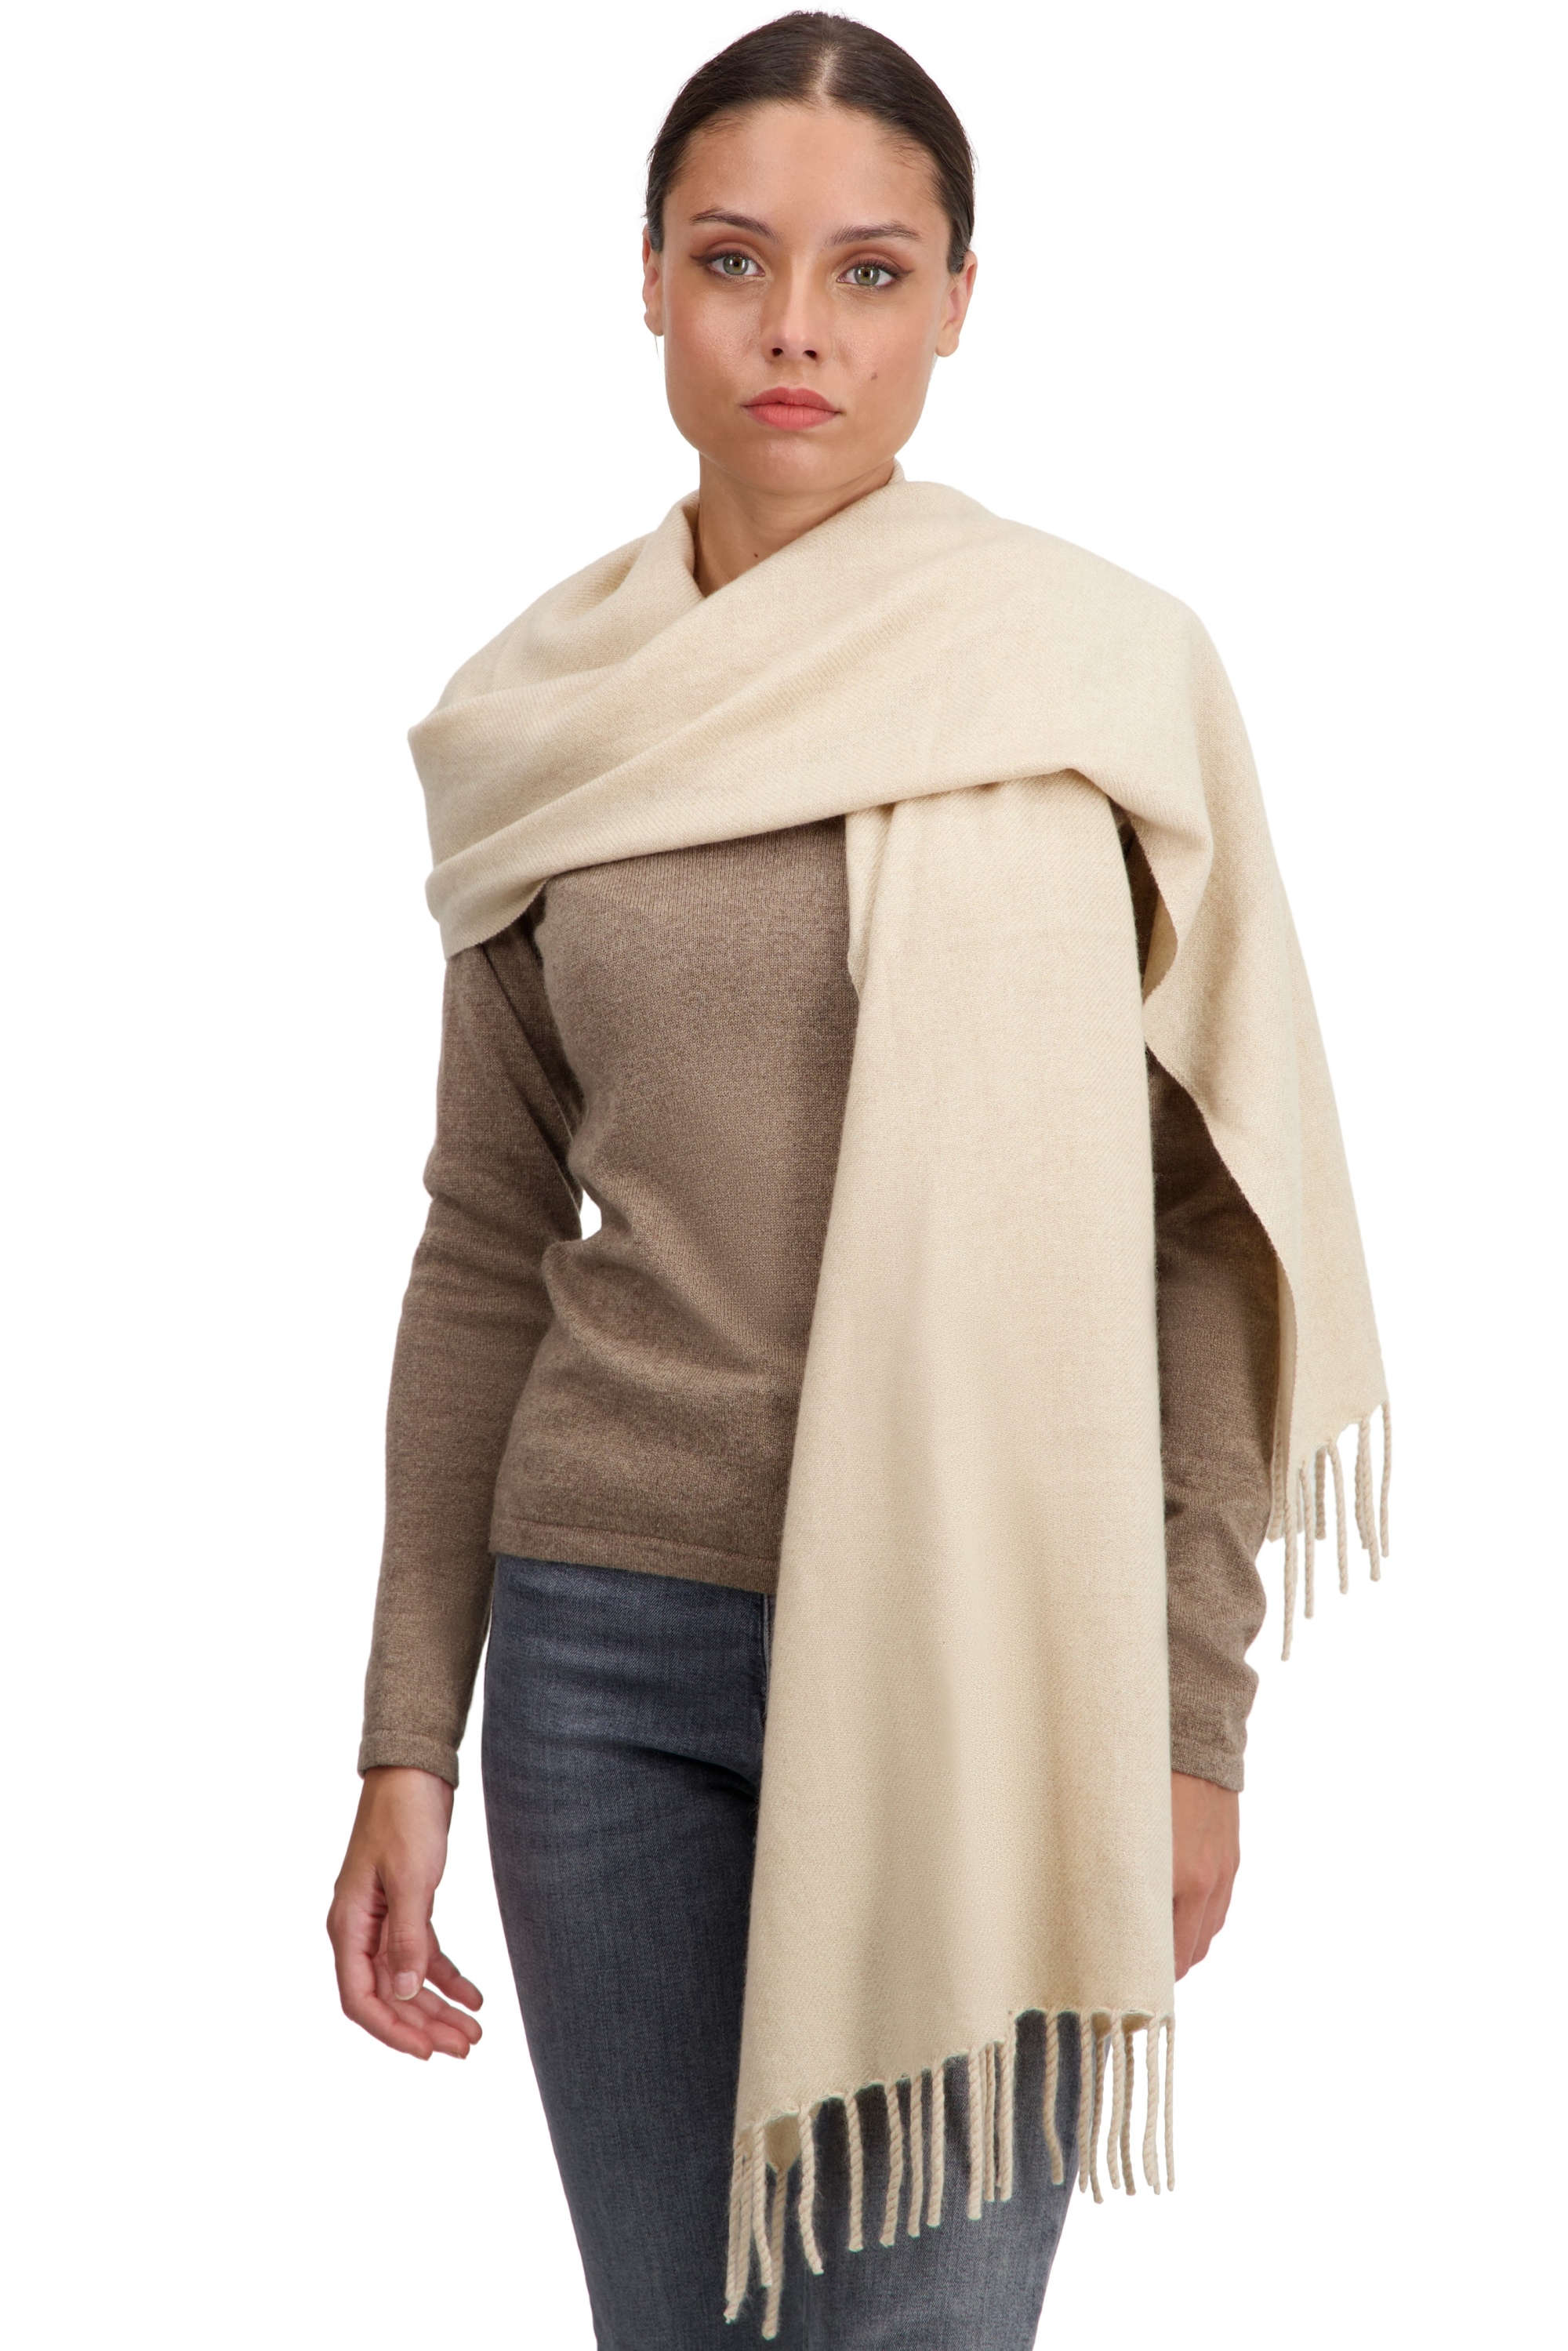 Kasjmier accessoires sjaals tartempion natural beige 210 x 45 cm